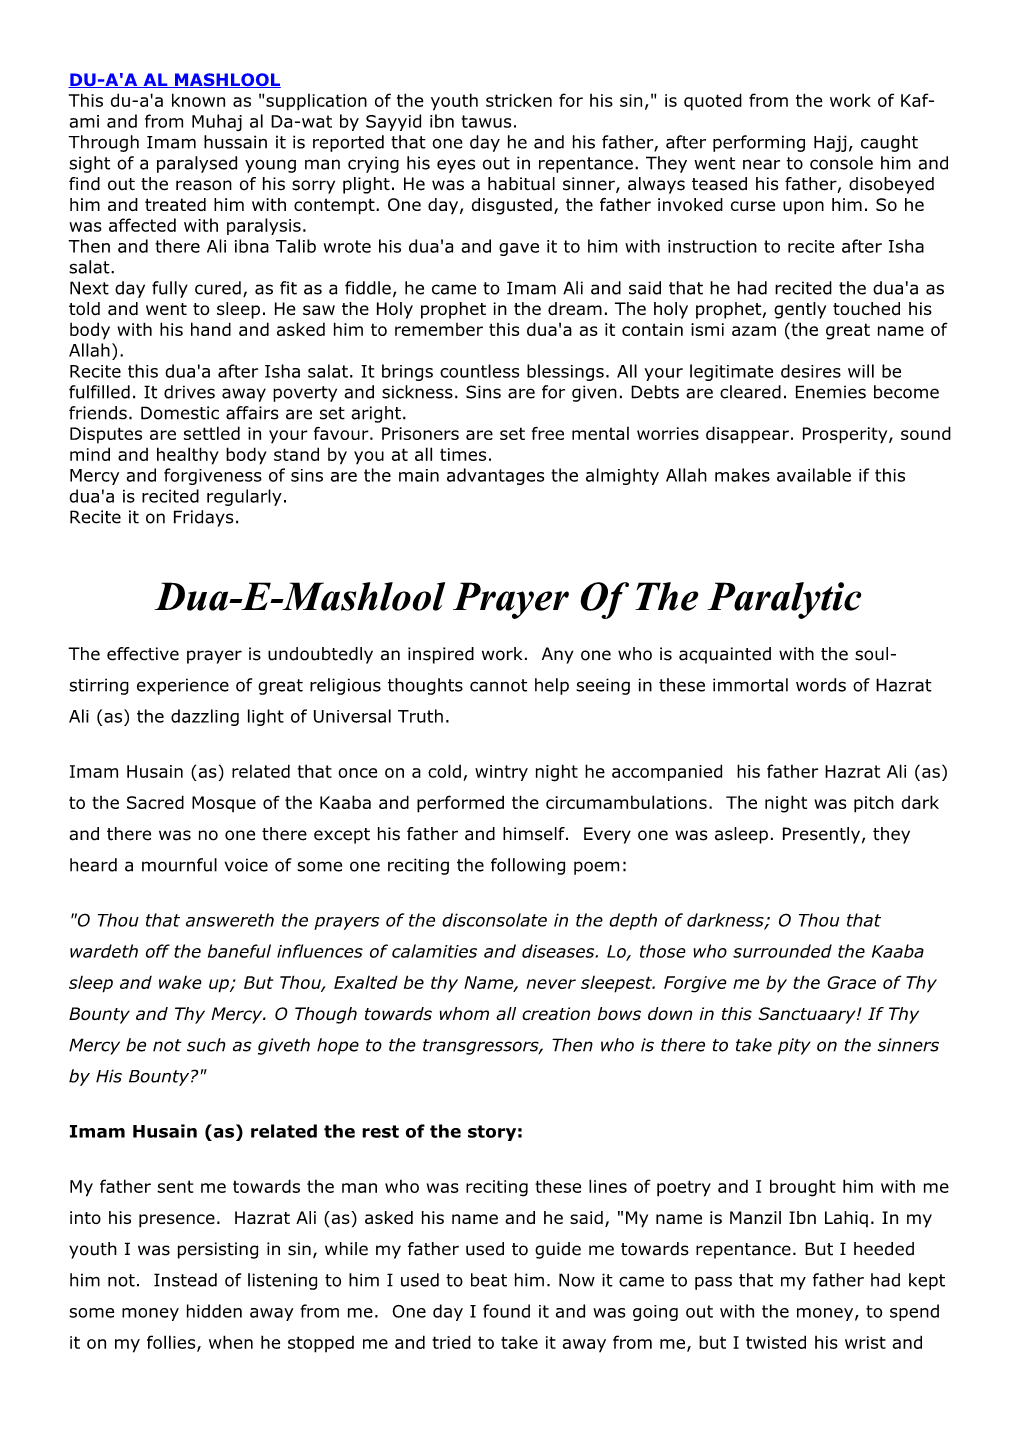 Dua-E-Mashlool Prayer of the Paralytic